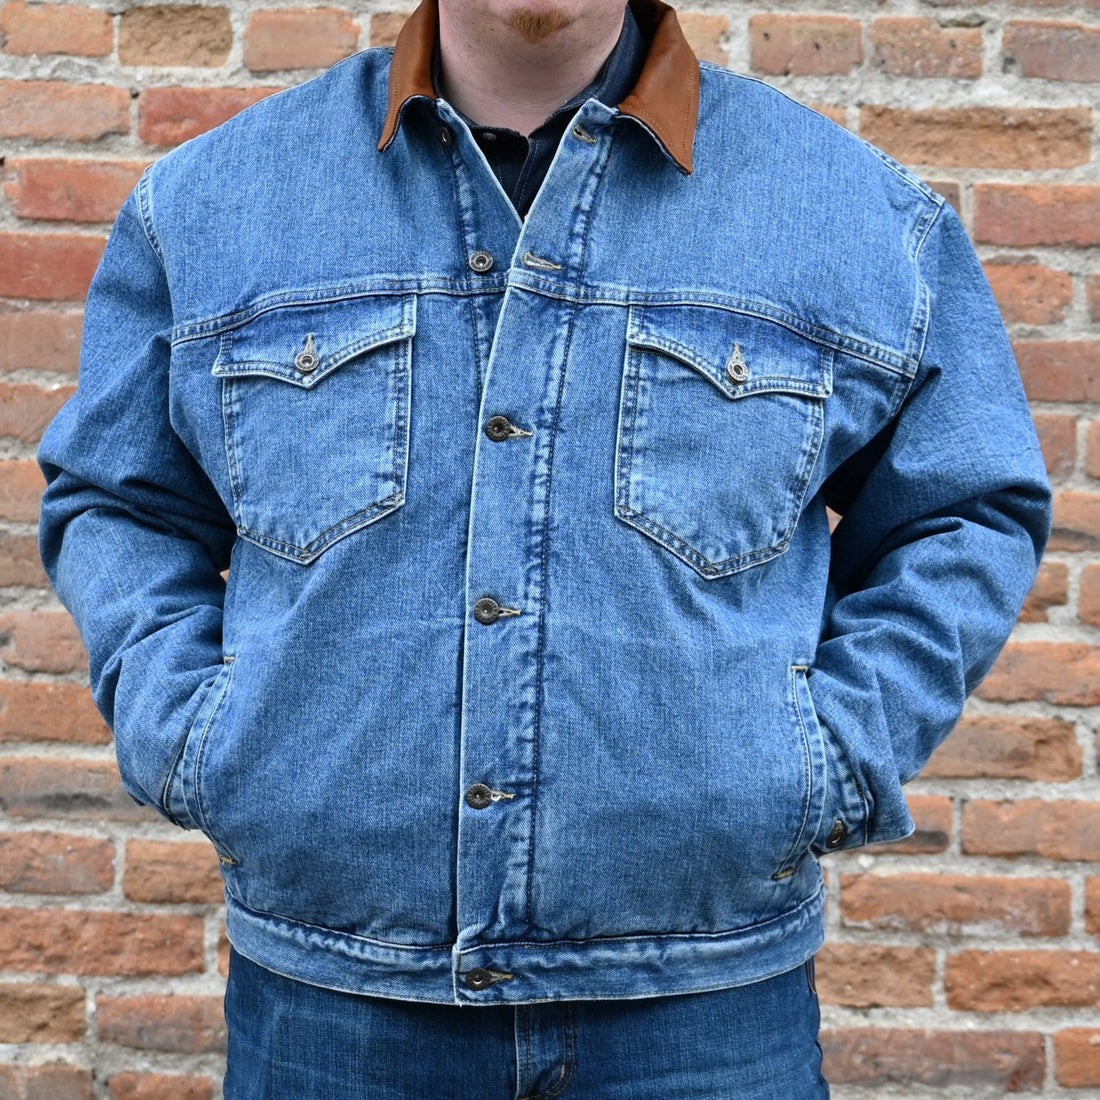 Schaefer Legend Denim Jacket with Fleece Lining in Indigo view of front of jacket on model size XL